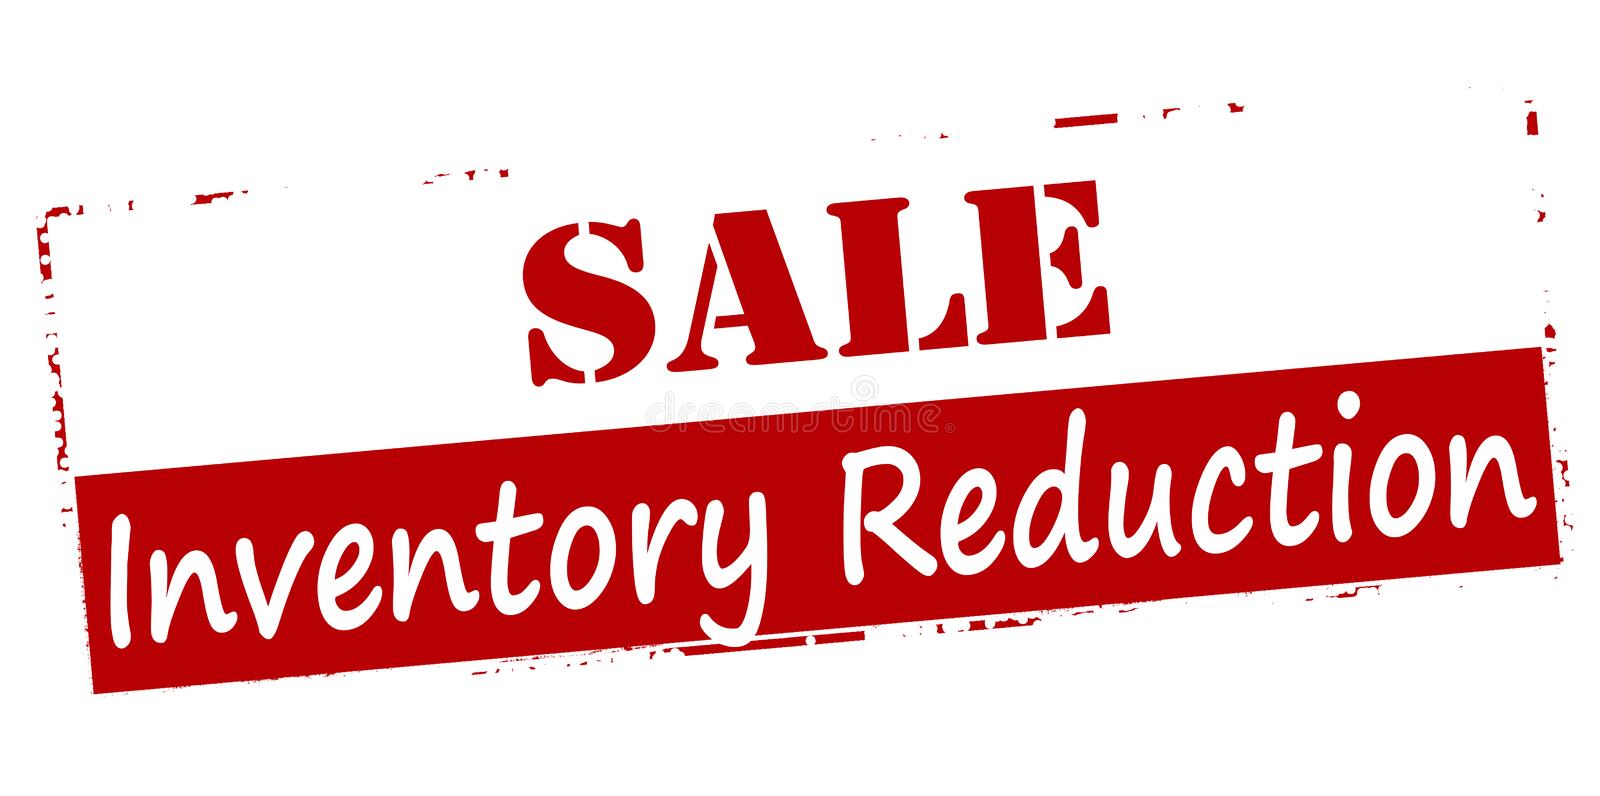 sale-inventory-reduction-rubber-stamp-text-inside-illustration-92113076.jpg